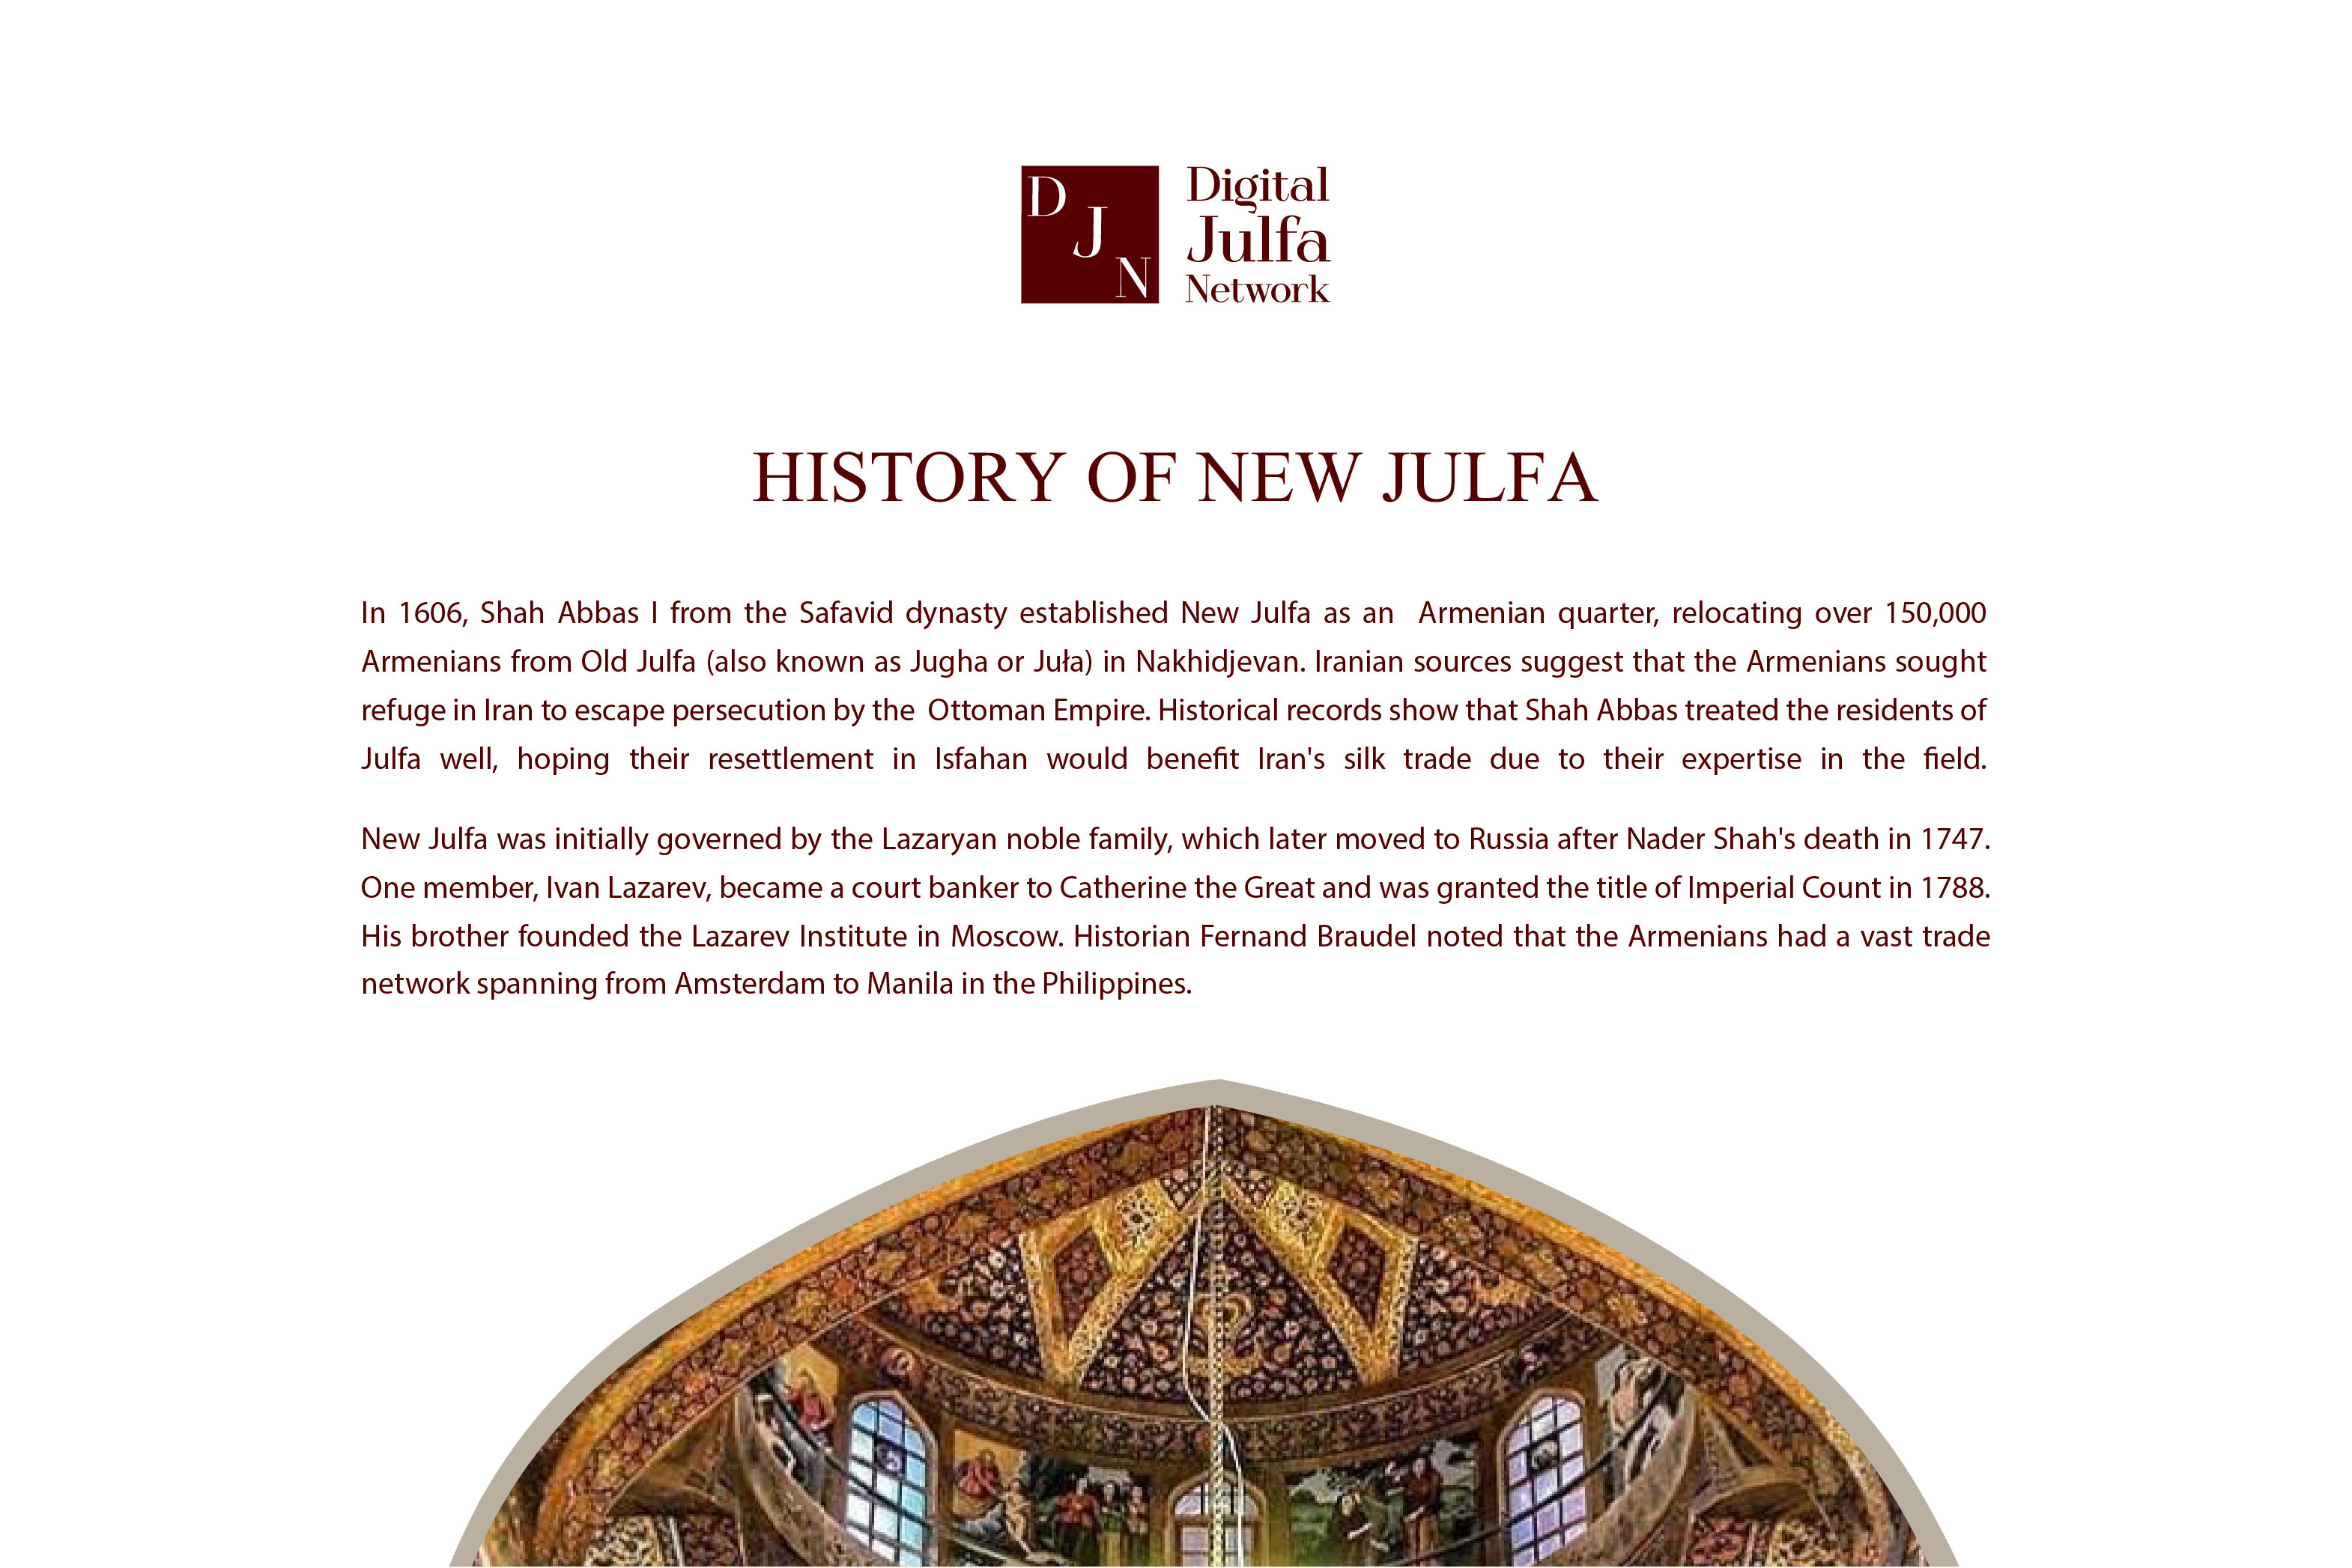 Digital Julfa network History.jpg (672 KB)